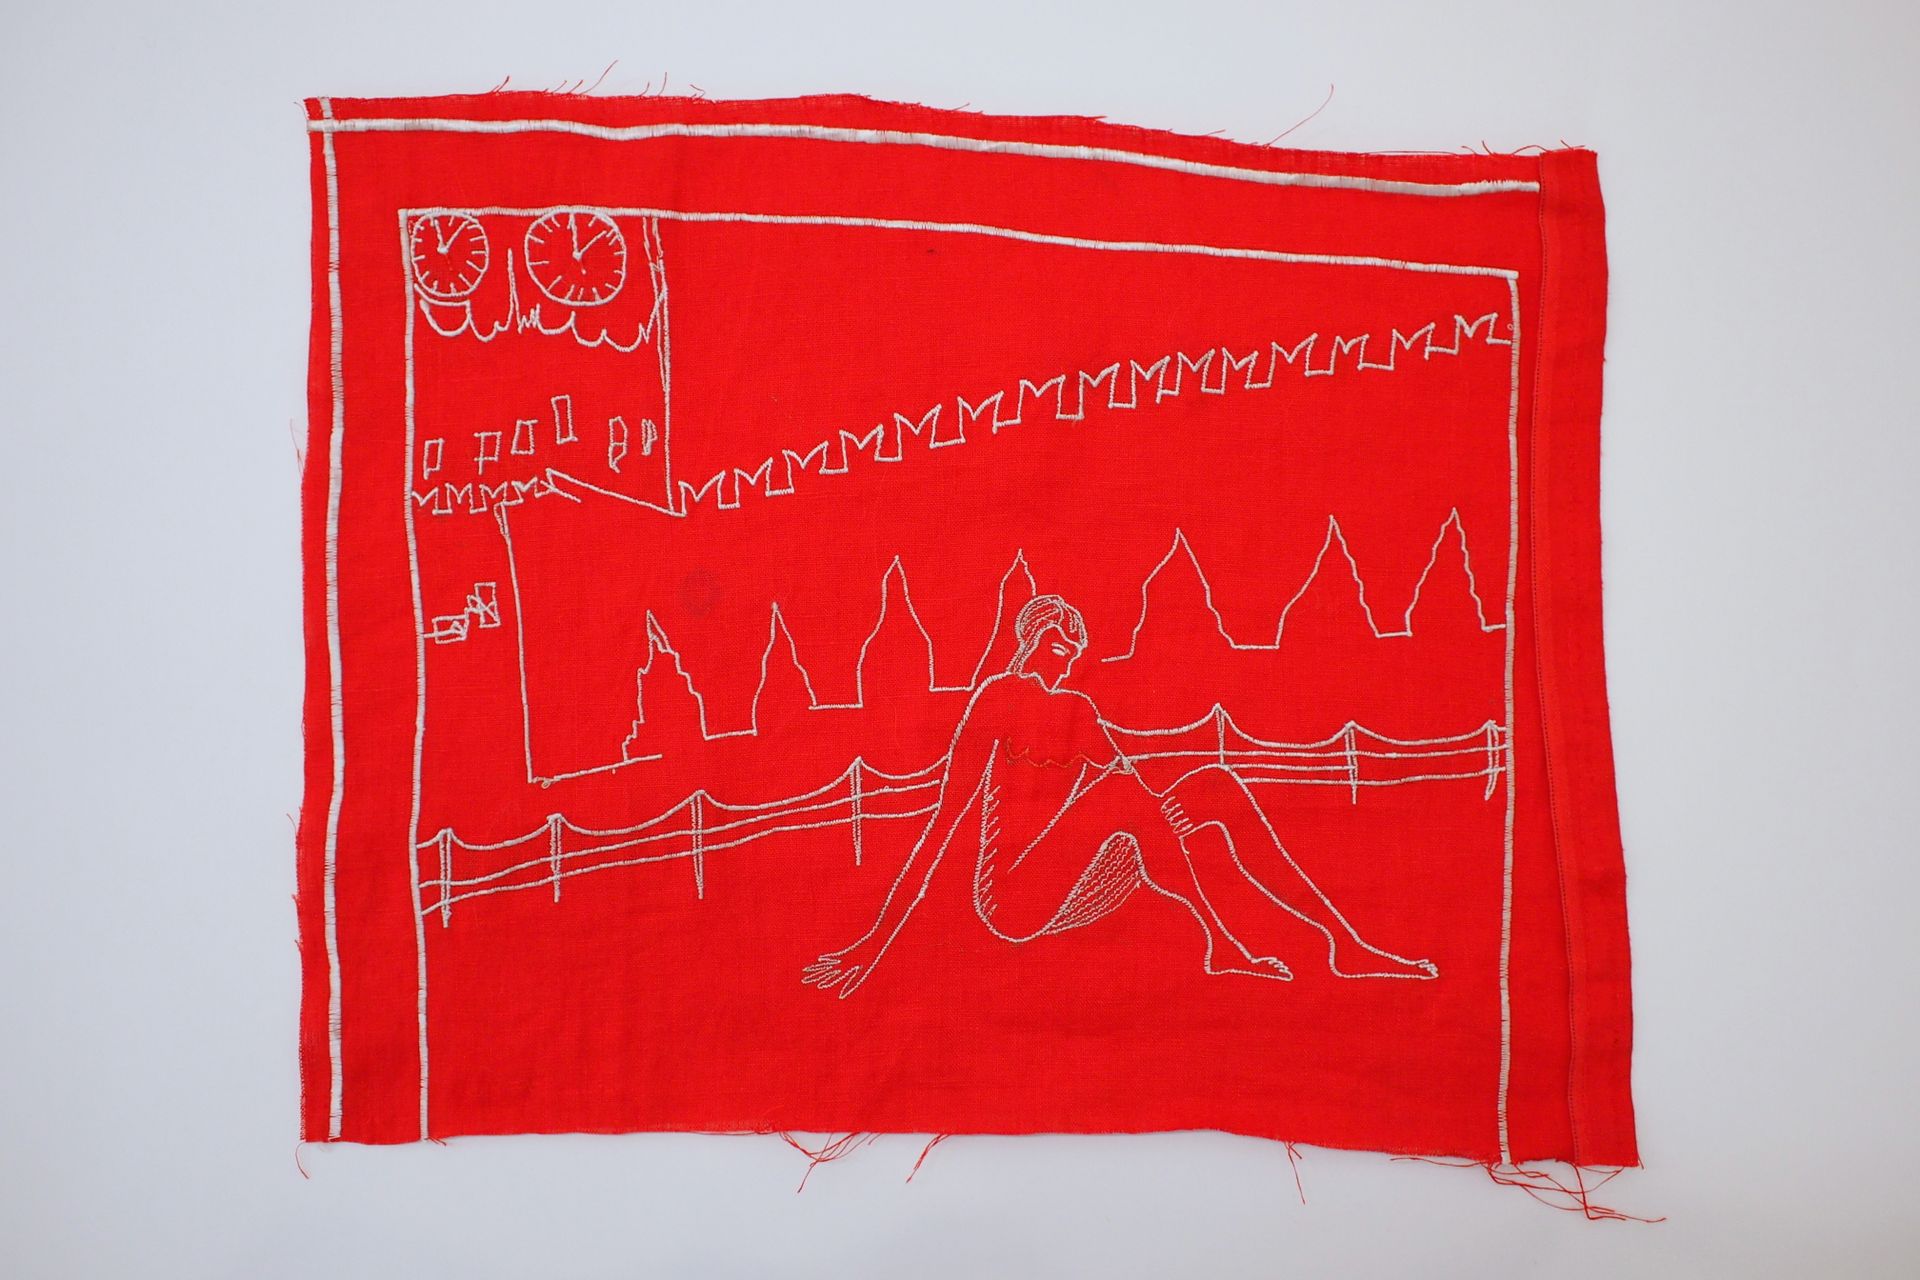 Мария Арендт (Вышивка - 
                  45 x 44 см) Из серии "Red Square Chronicles"